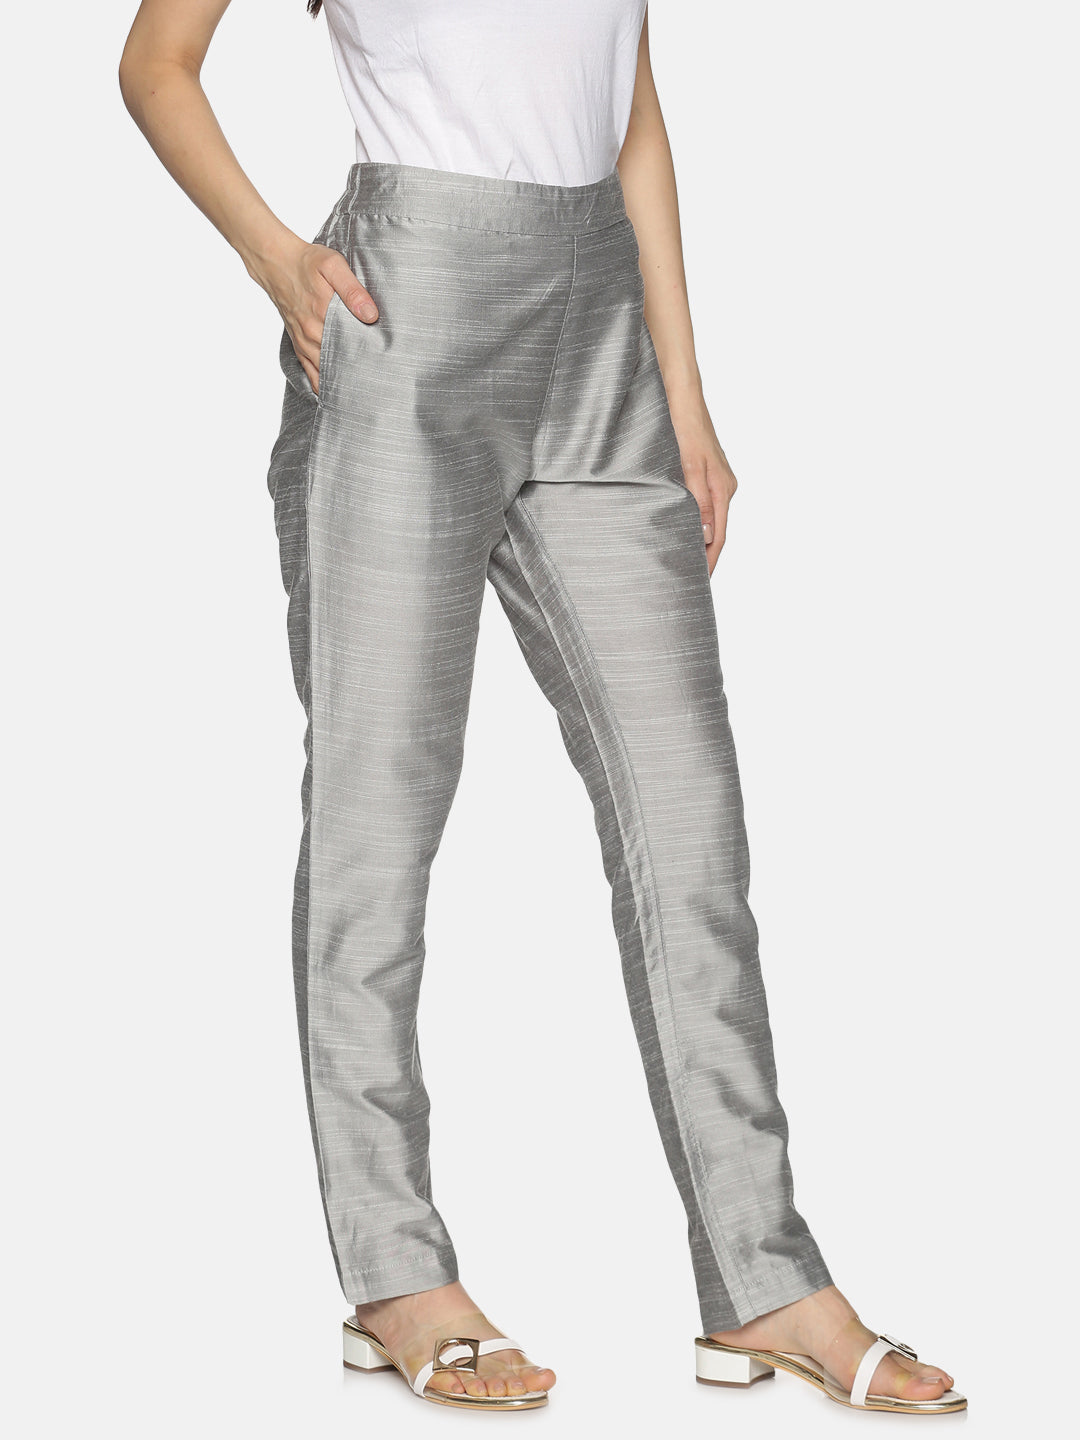 Buy VARANGA Silver Grey Silk Womens Casual Trousers  Shoppers Stop